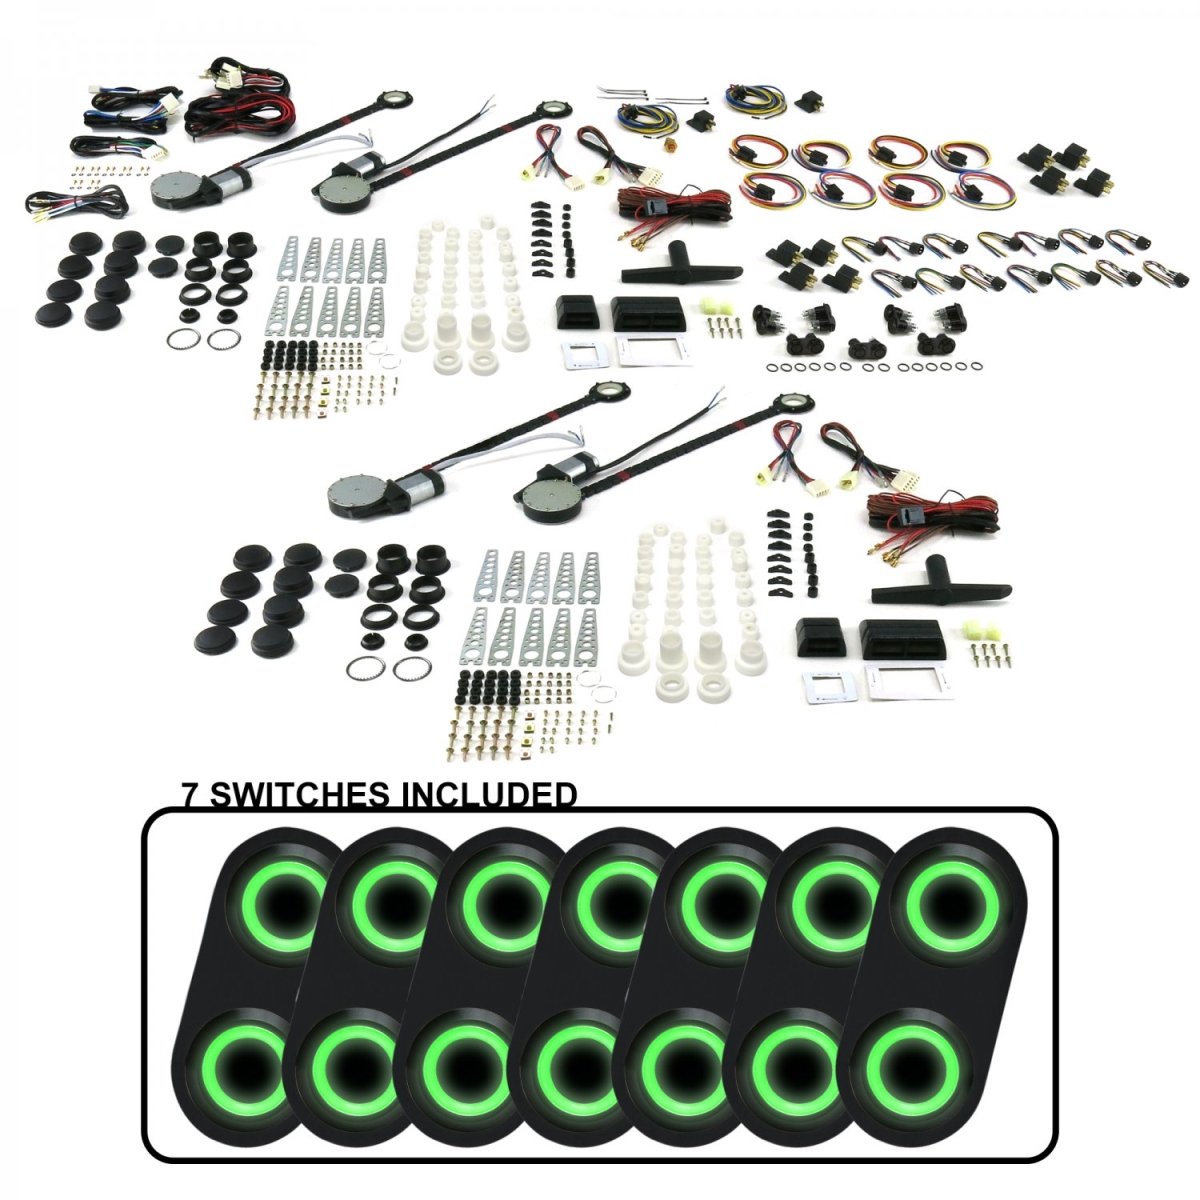 Picture of Autoloc 18647 4-Door Universal Power Window Kit with 7 Daytona Black Switches - Green Illumination